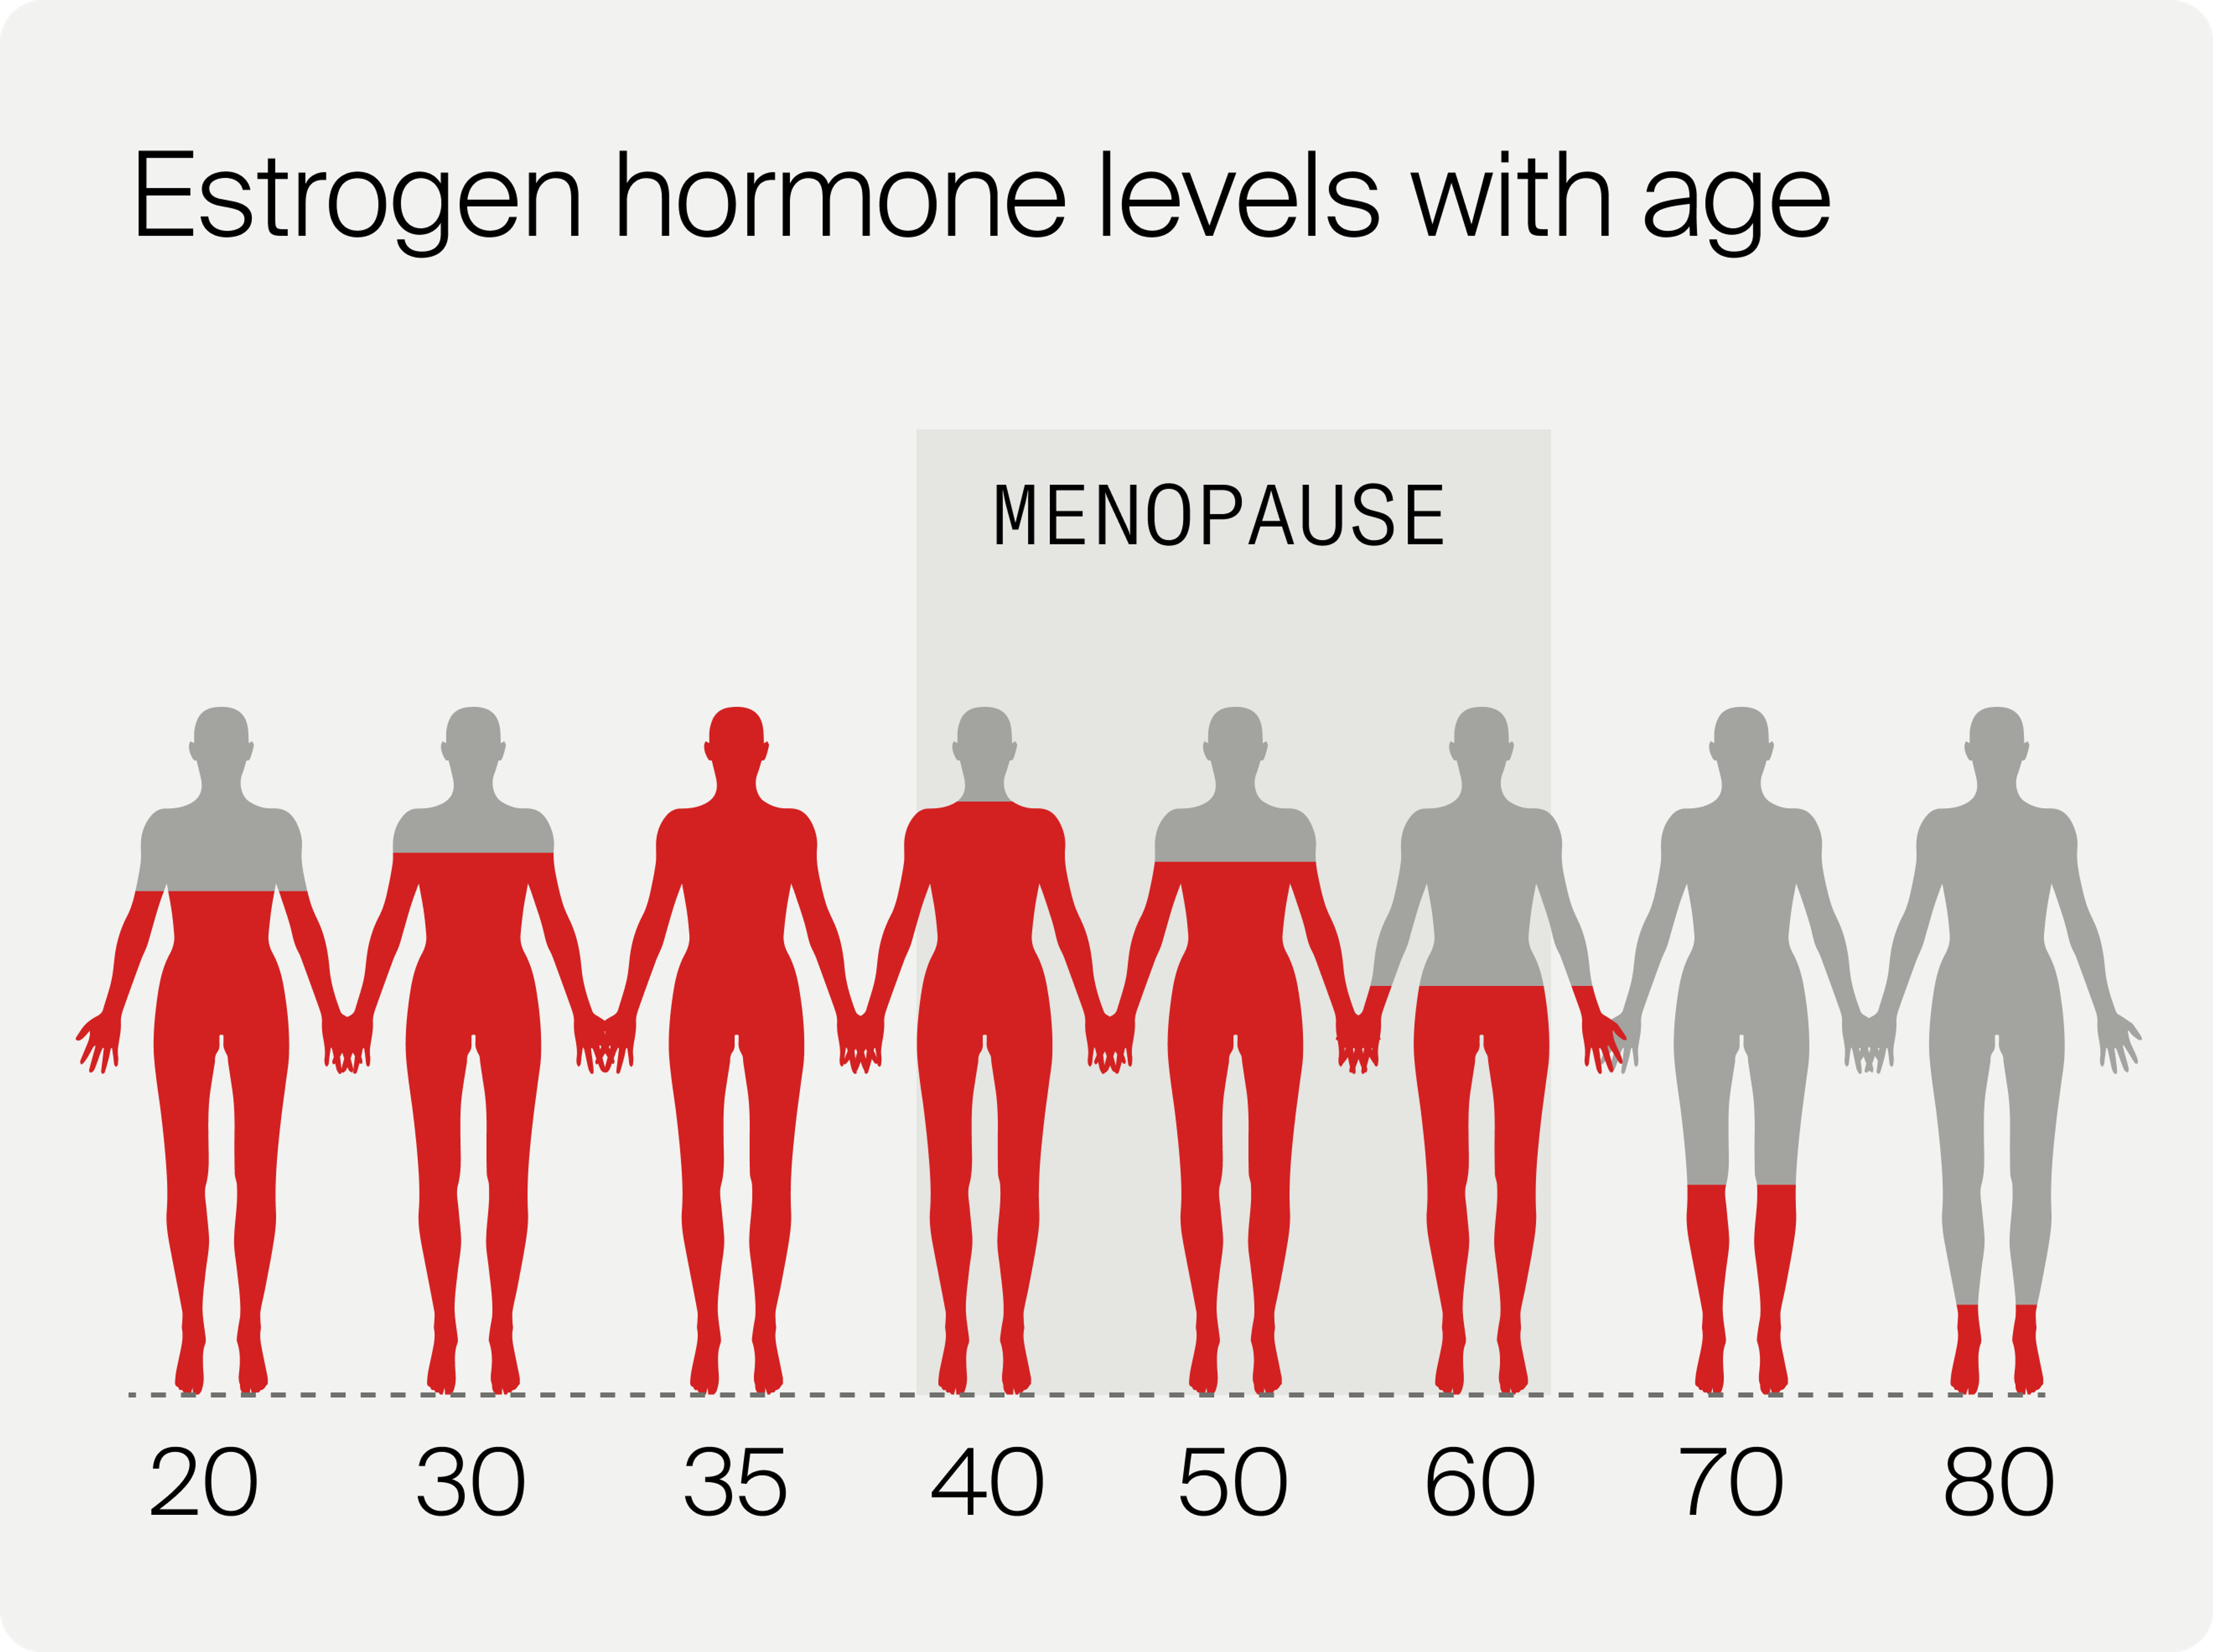 Strogen levels in menopause